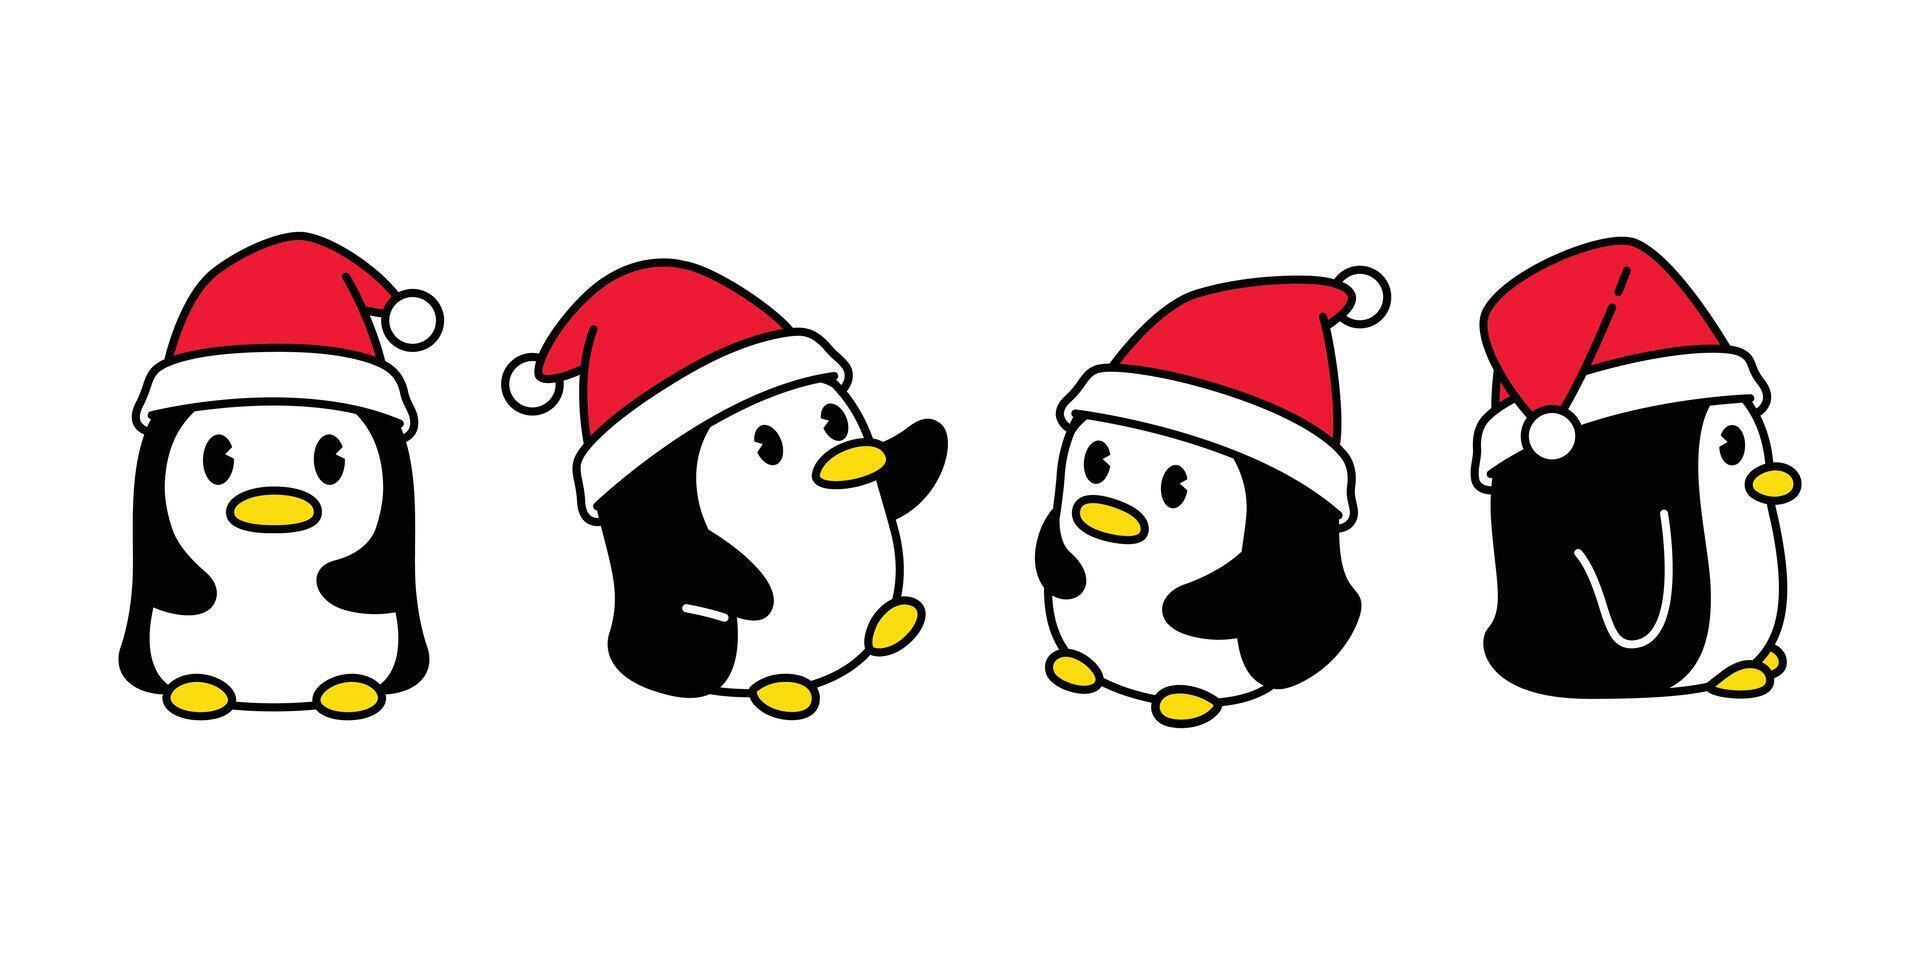 penguin christmas santa claus hat bird icon cartoon character logo illustration symbol doodle graphic design vector